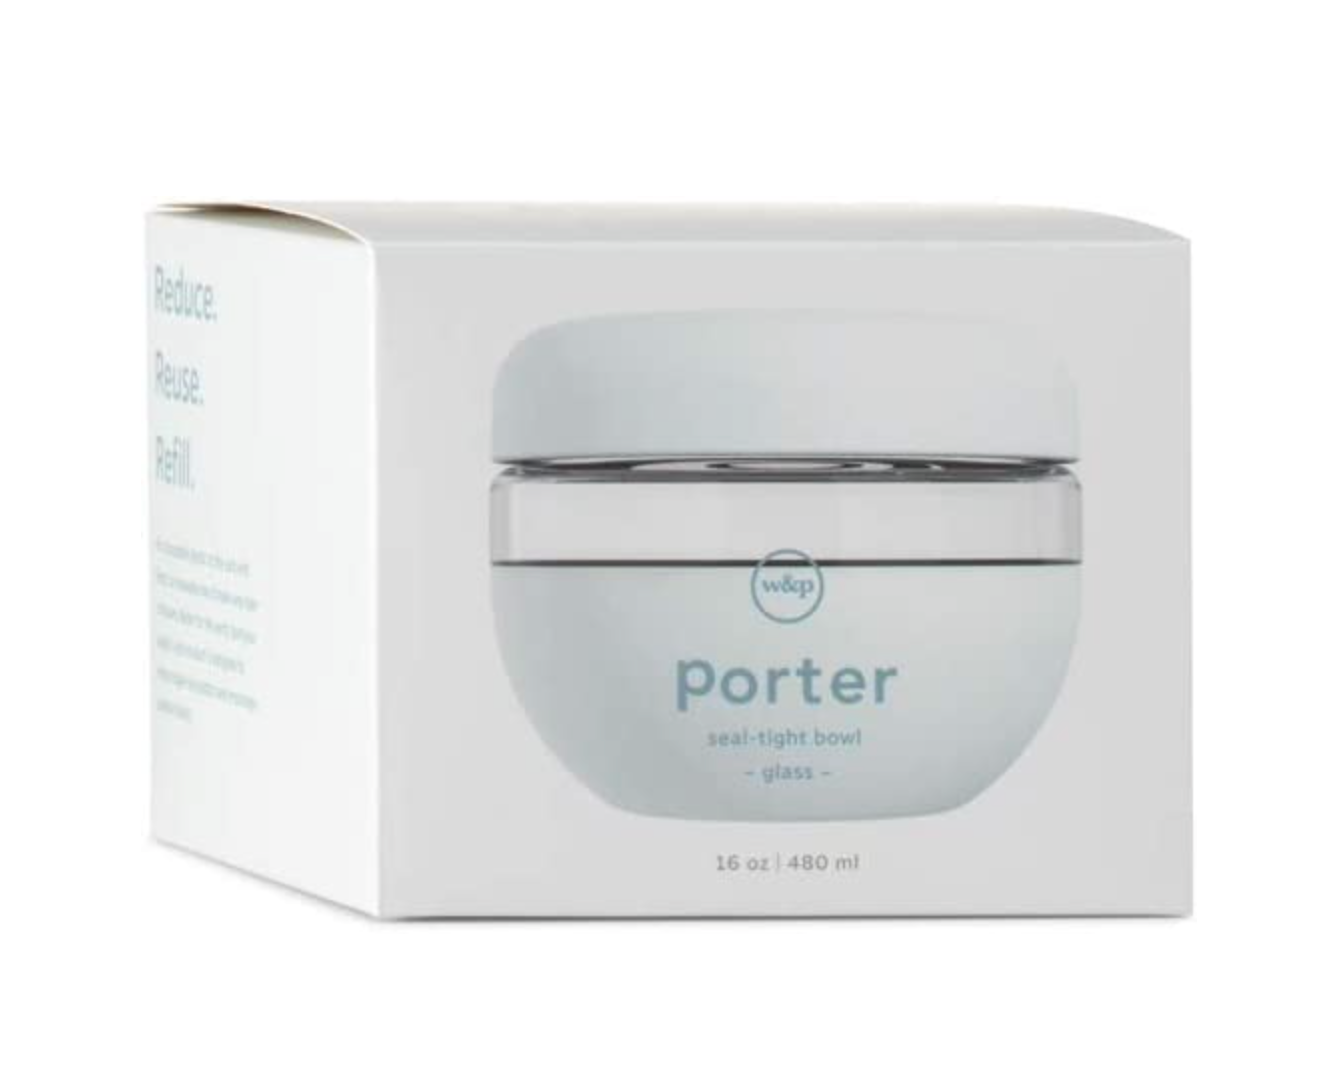 Porter Seal-Tight Glass Bowl 16oz - Mint